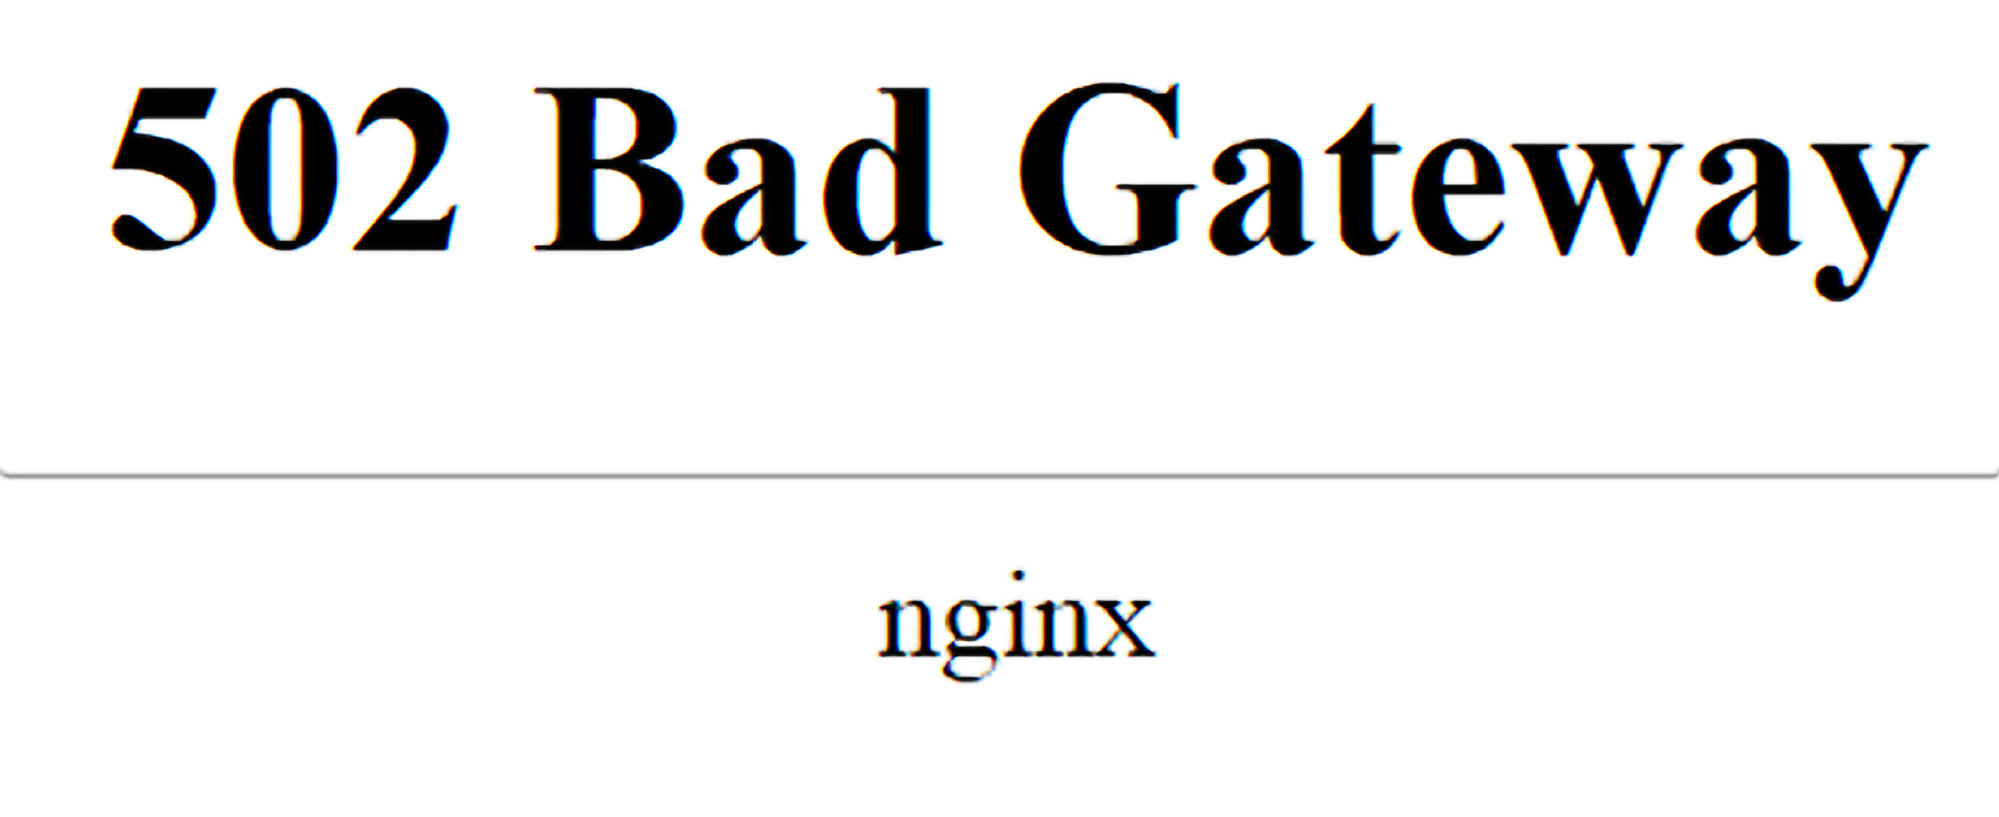 Bad Gateway 502 Porn - Spotify: 502 Bad Gateway. nginx. | sorabji at WSBJ.com